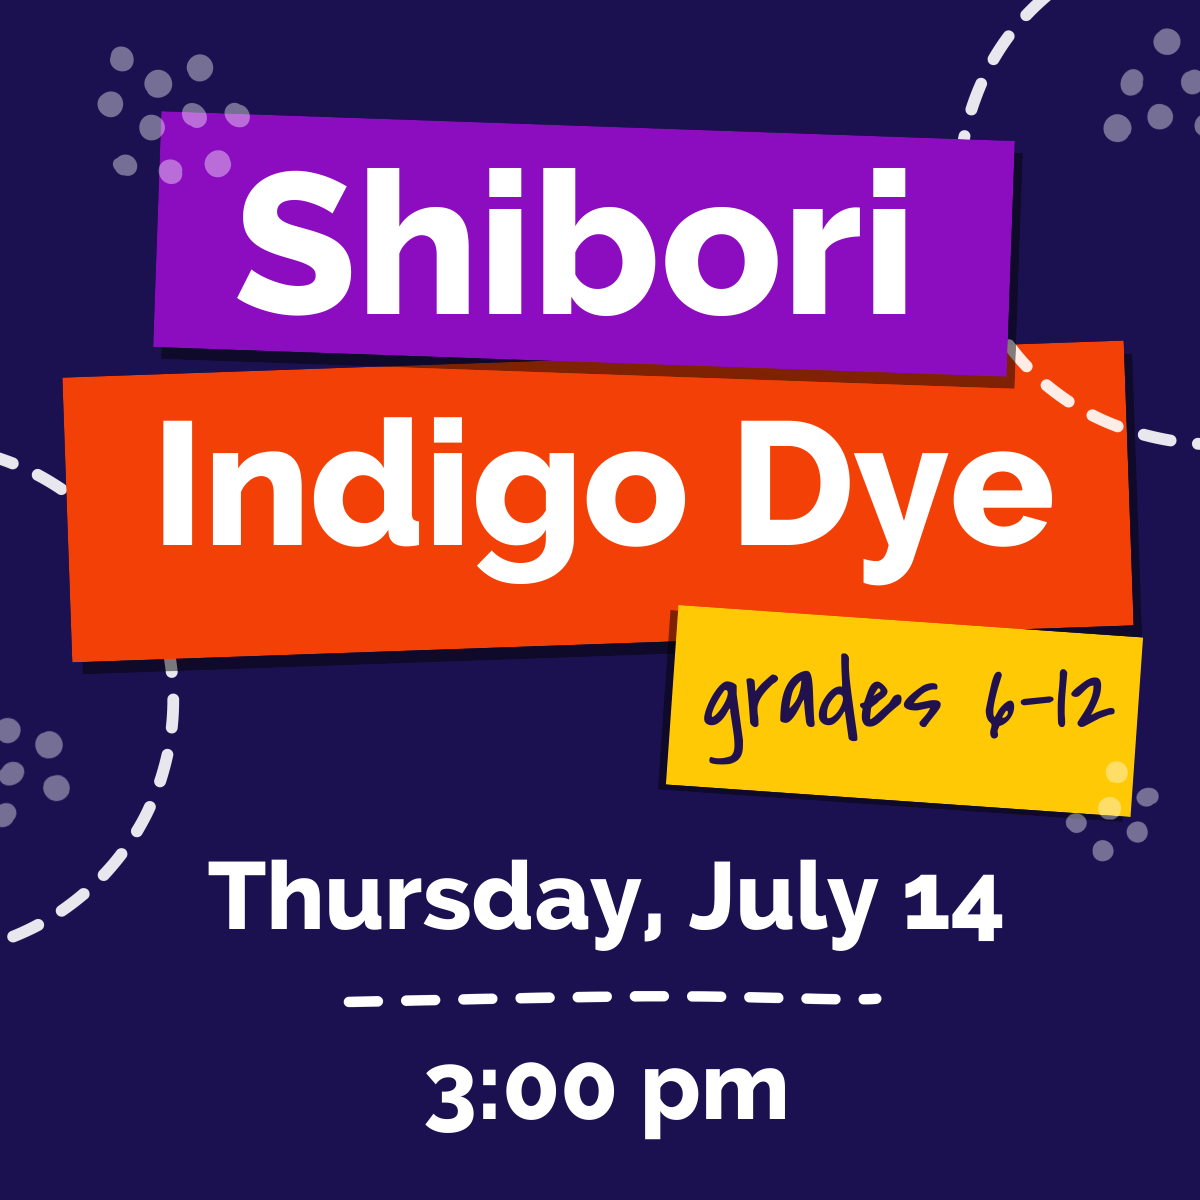 Shibori Indigo Dye grades 6-12 Thursday, July 14 3:00pm